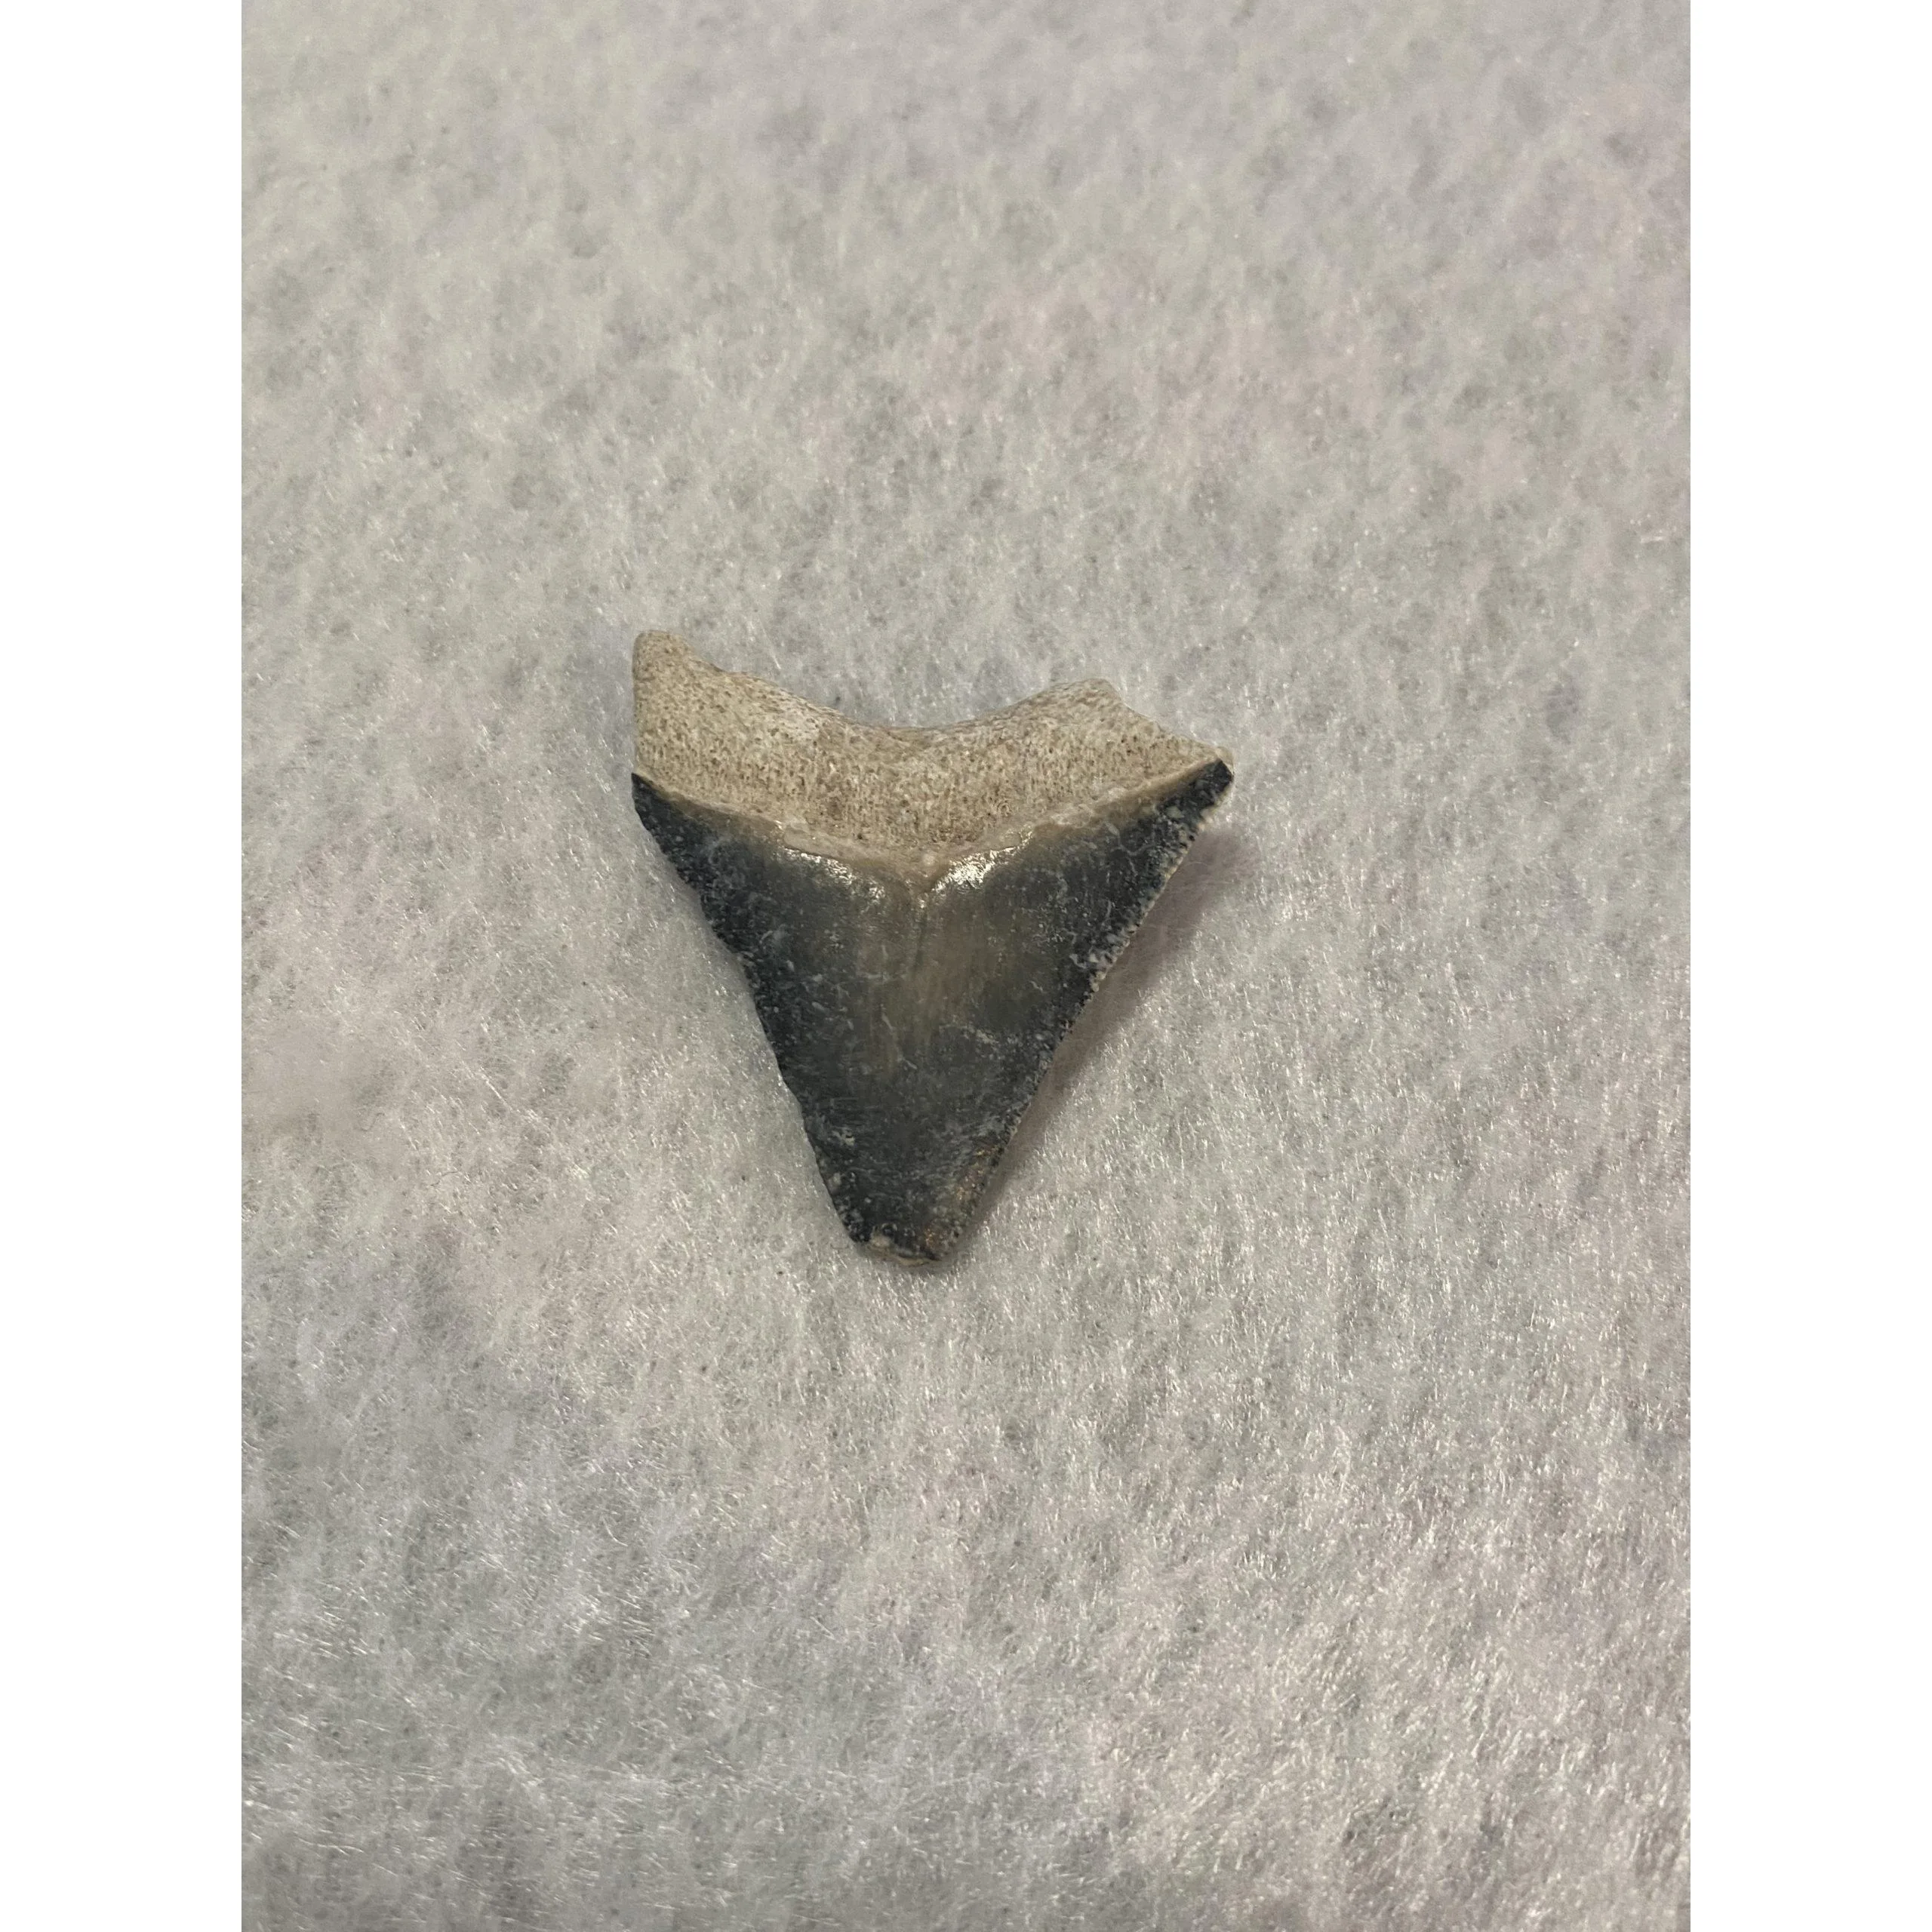 Megalodon Tooth  Bone Valley, Florida 1.69 inch Prehistoric Online